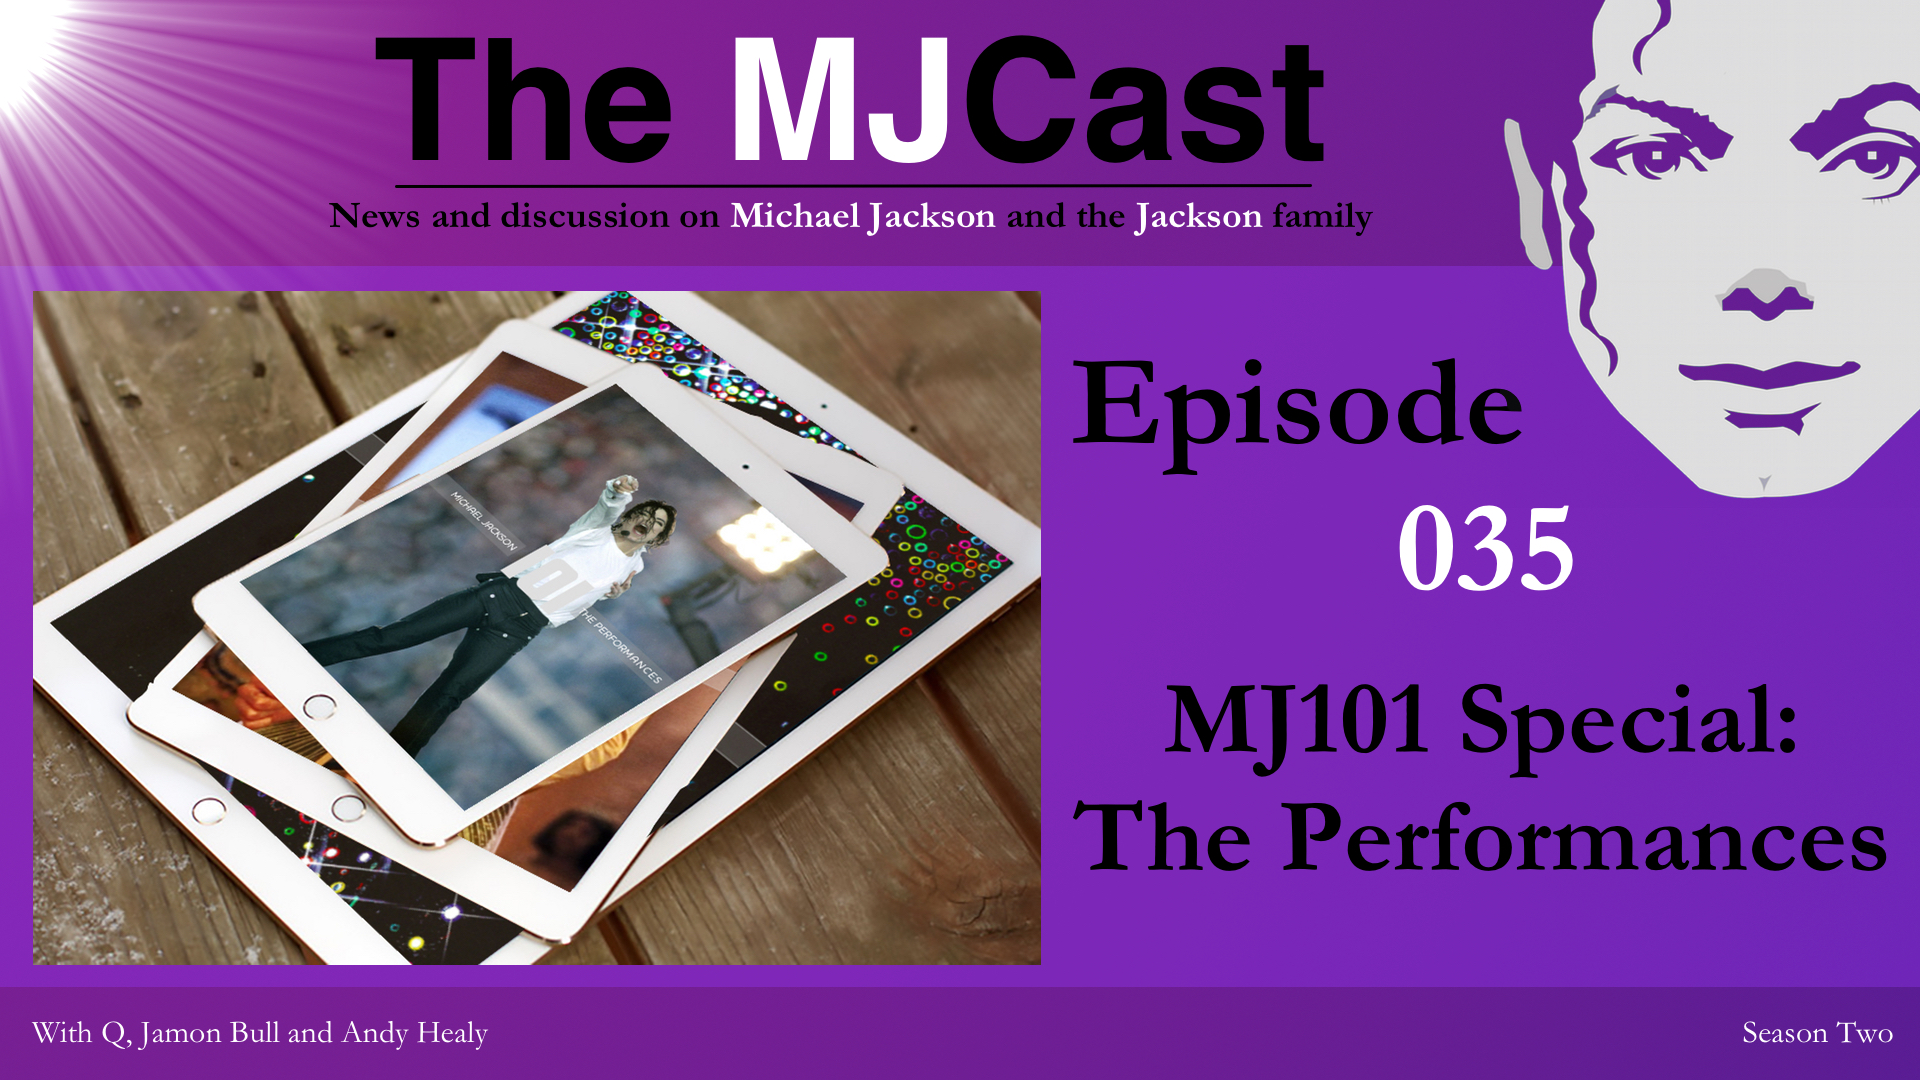 Episode 035 - MJ101 Special - The Performances Show Art